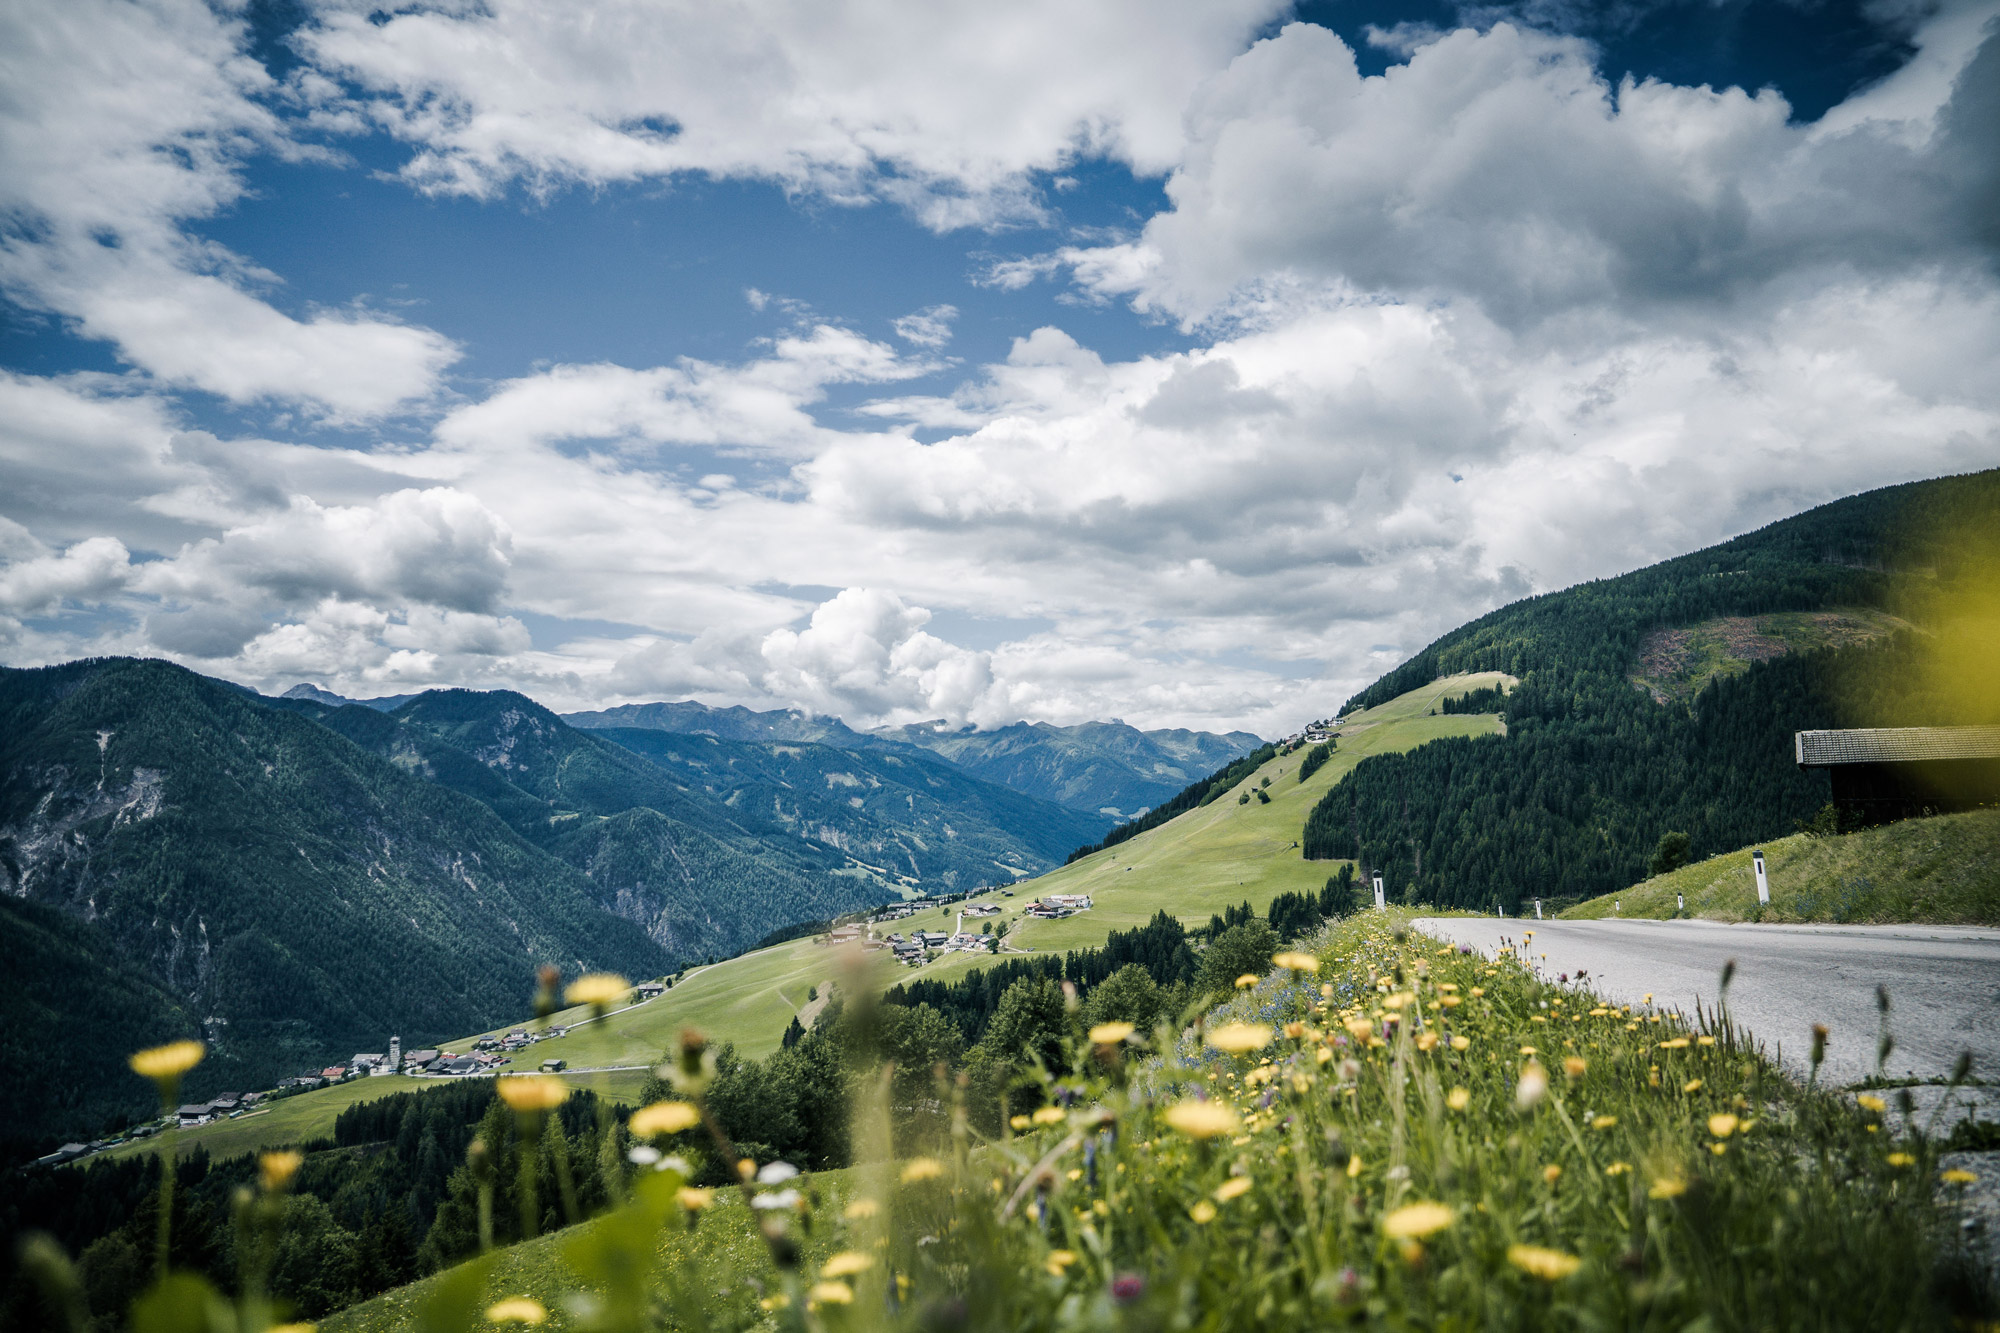 Road in alpine landscape